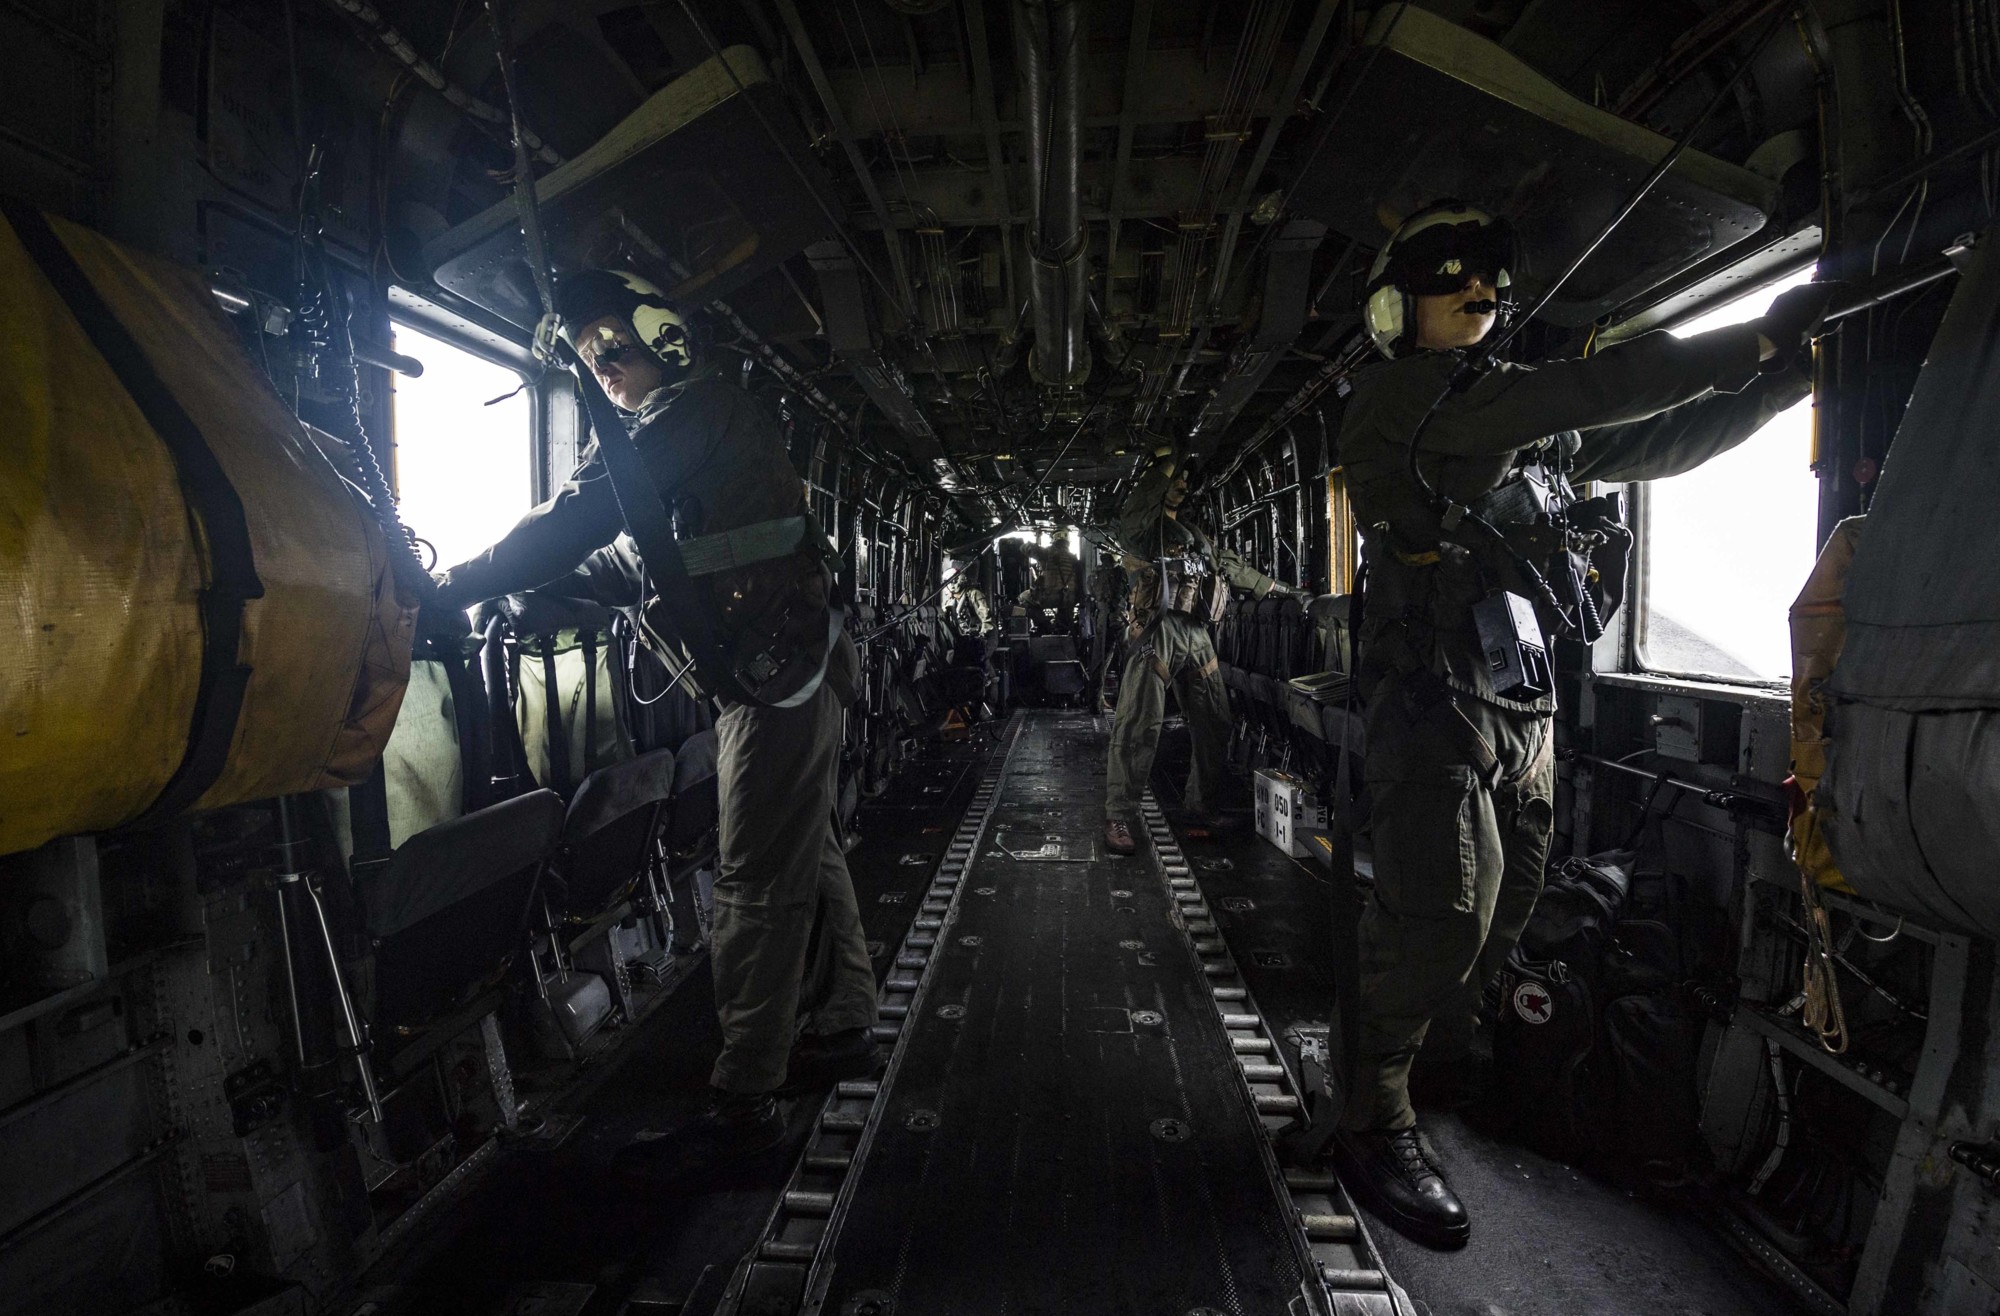 hm-14 vanguard helicopter mine countermeasures squadron navy mh-53e sea dragon 105 interieur